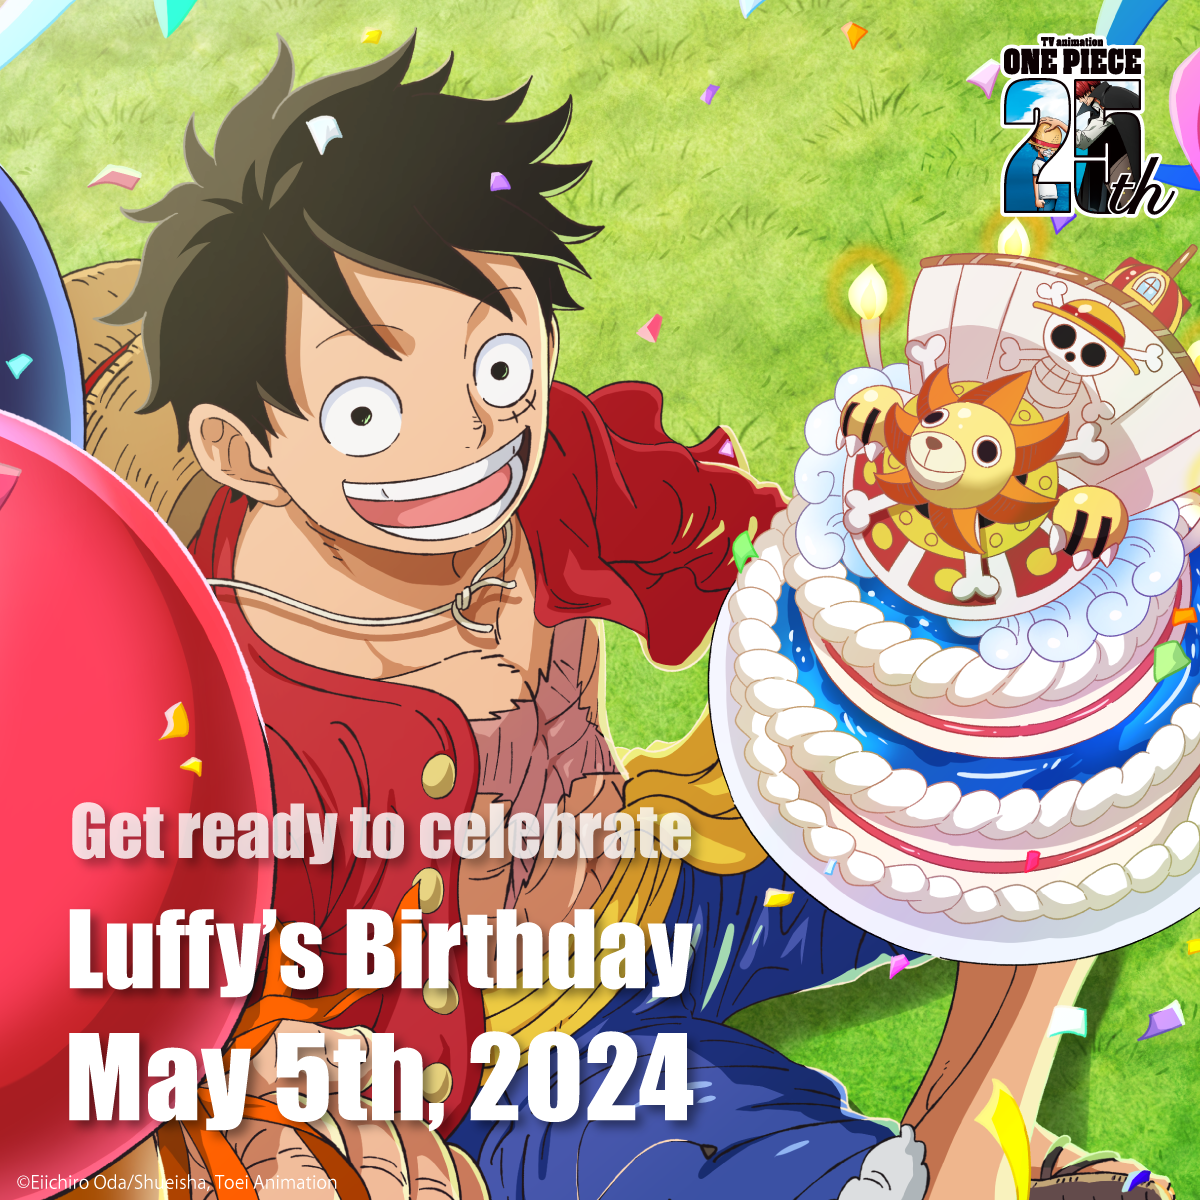 One Piece 25 Years - Luffy Key Art